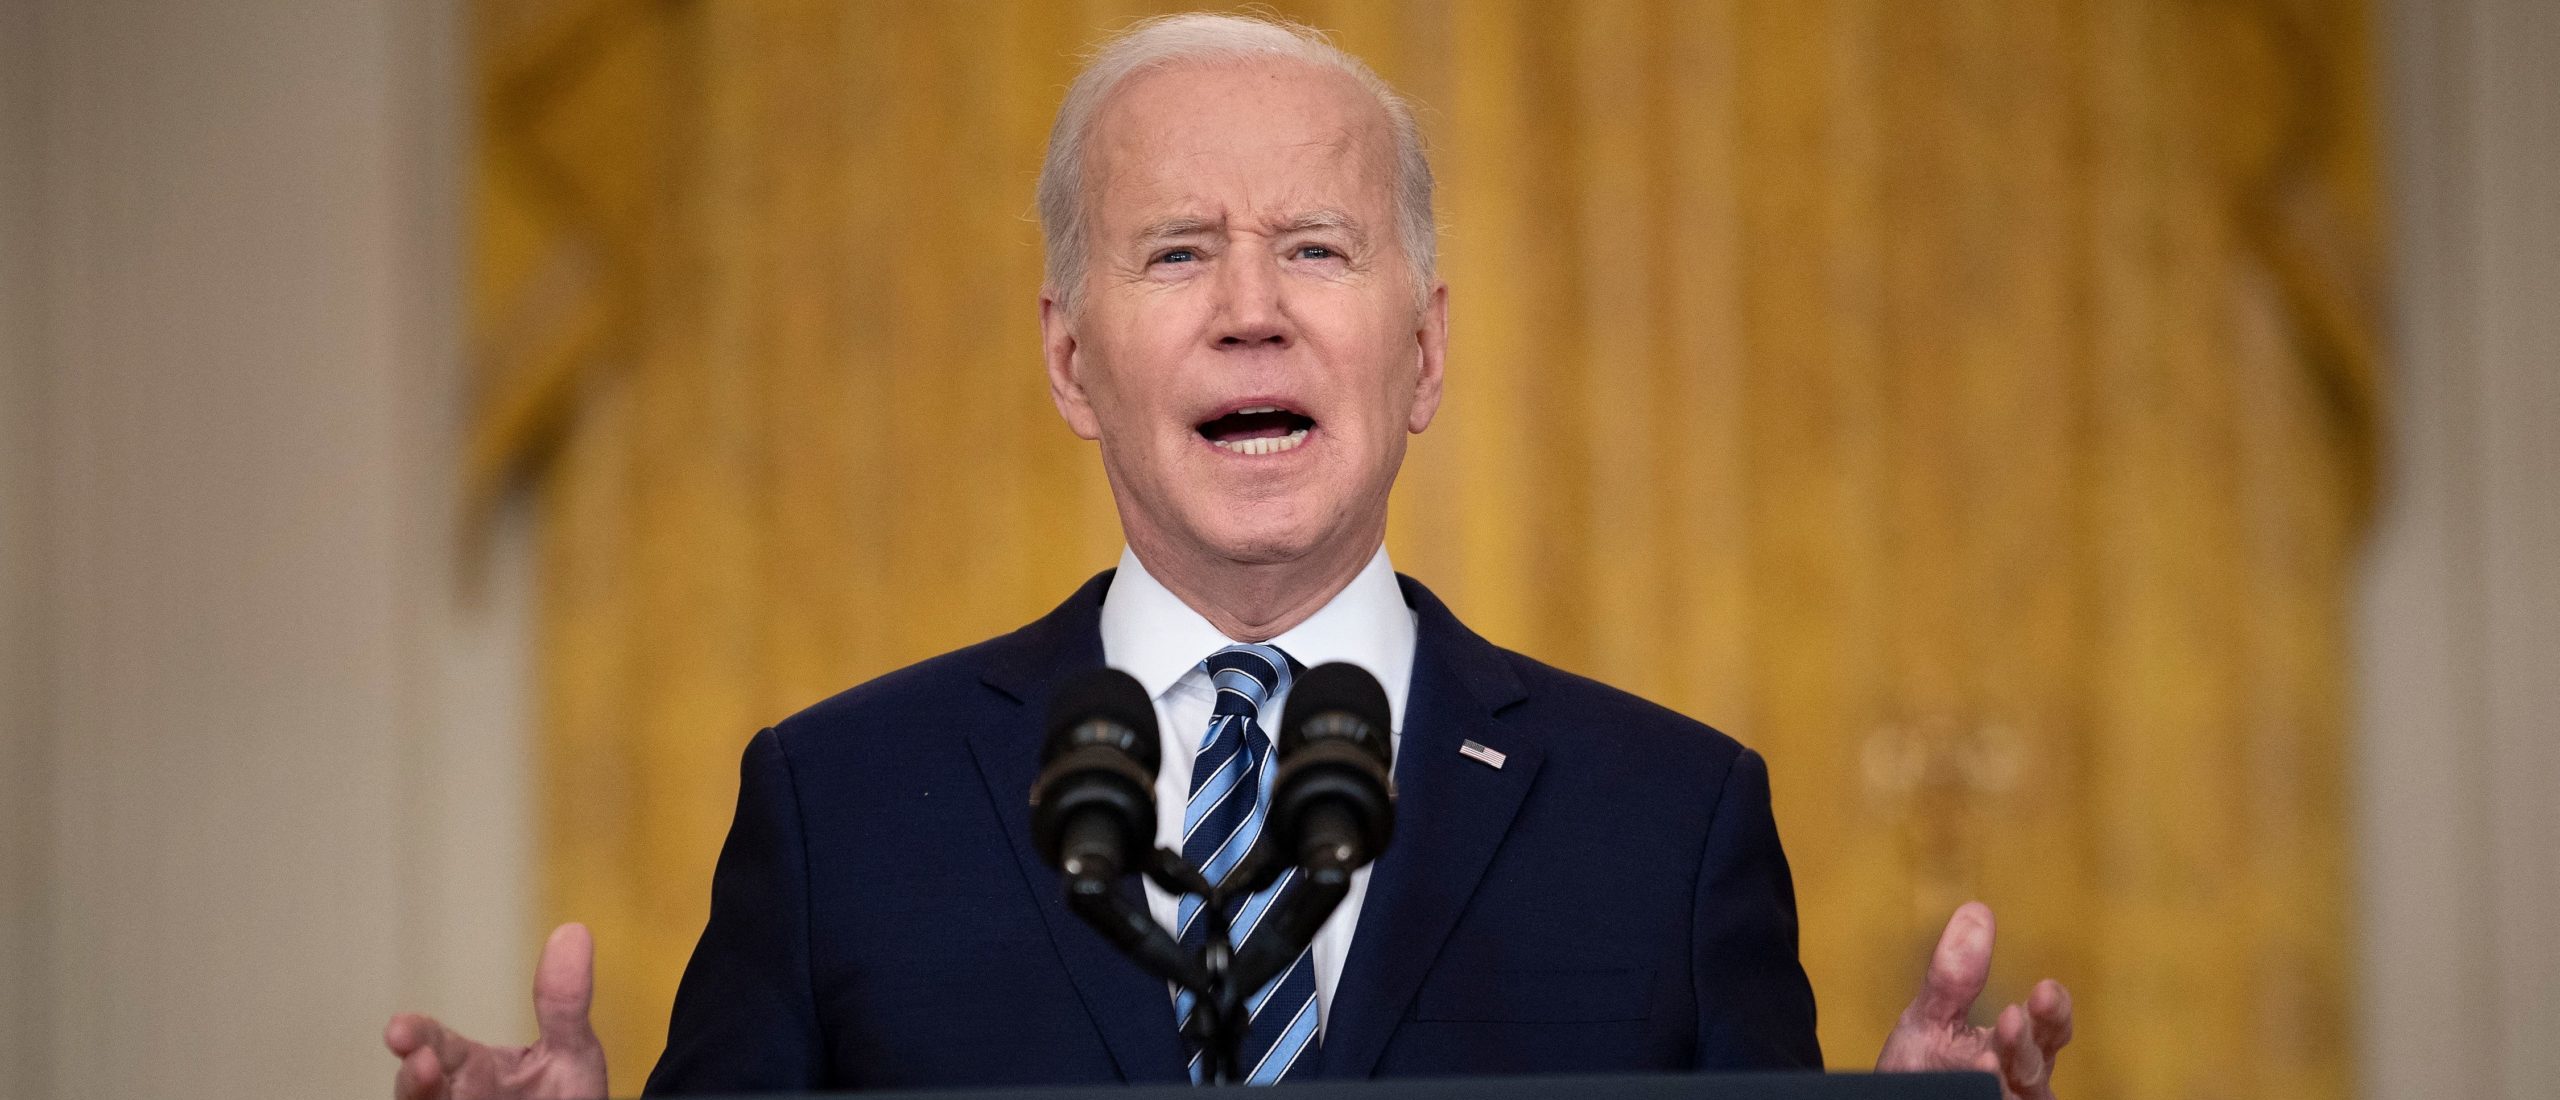 President Joe Biden delivers remarks about Russia's invasion of Ukraine on Thursday. (Brendan Smialowski/AFP via Getty Images)